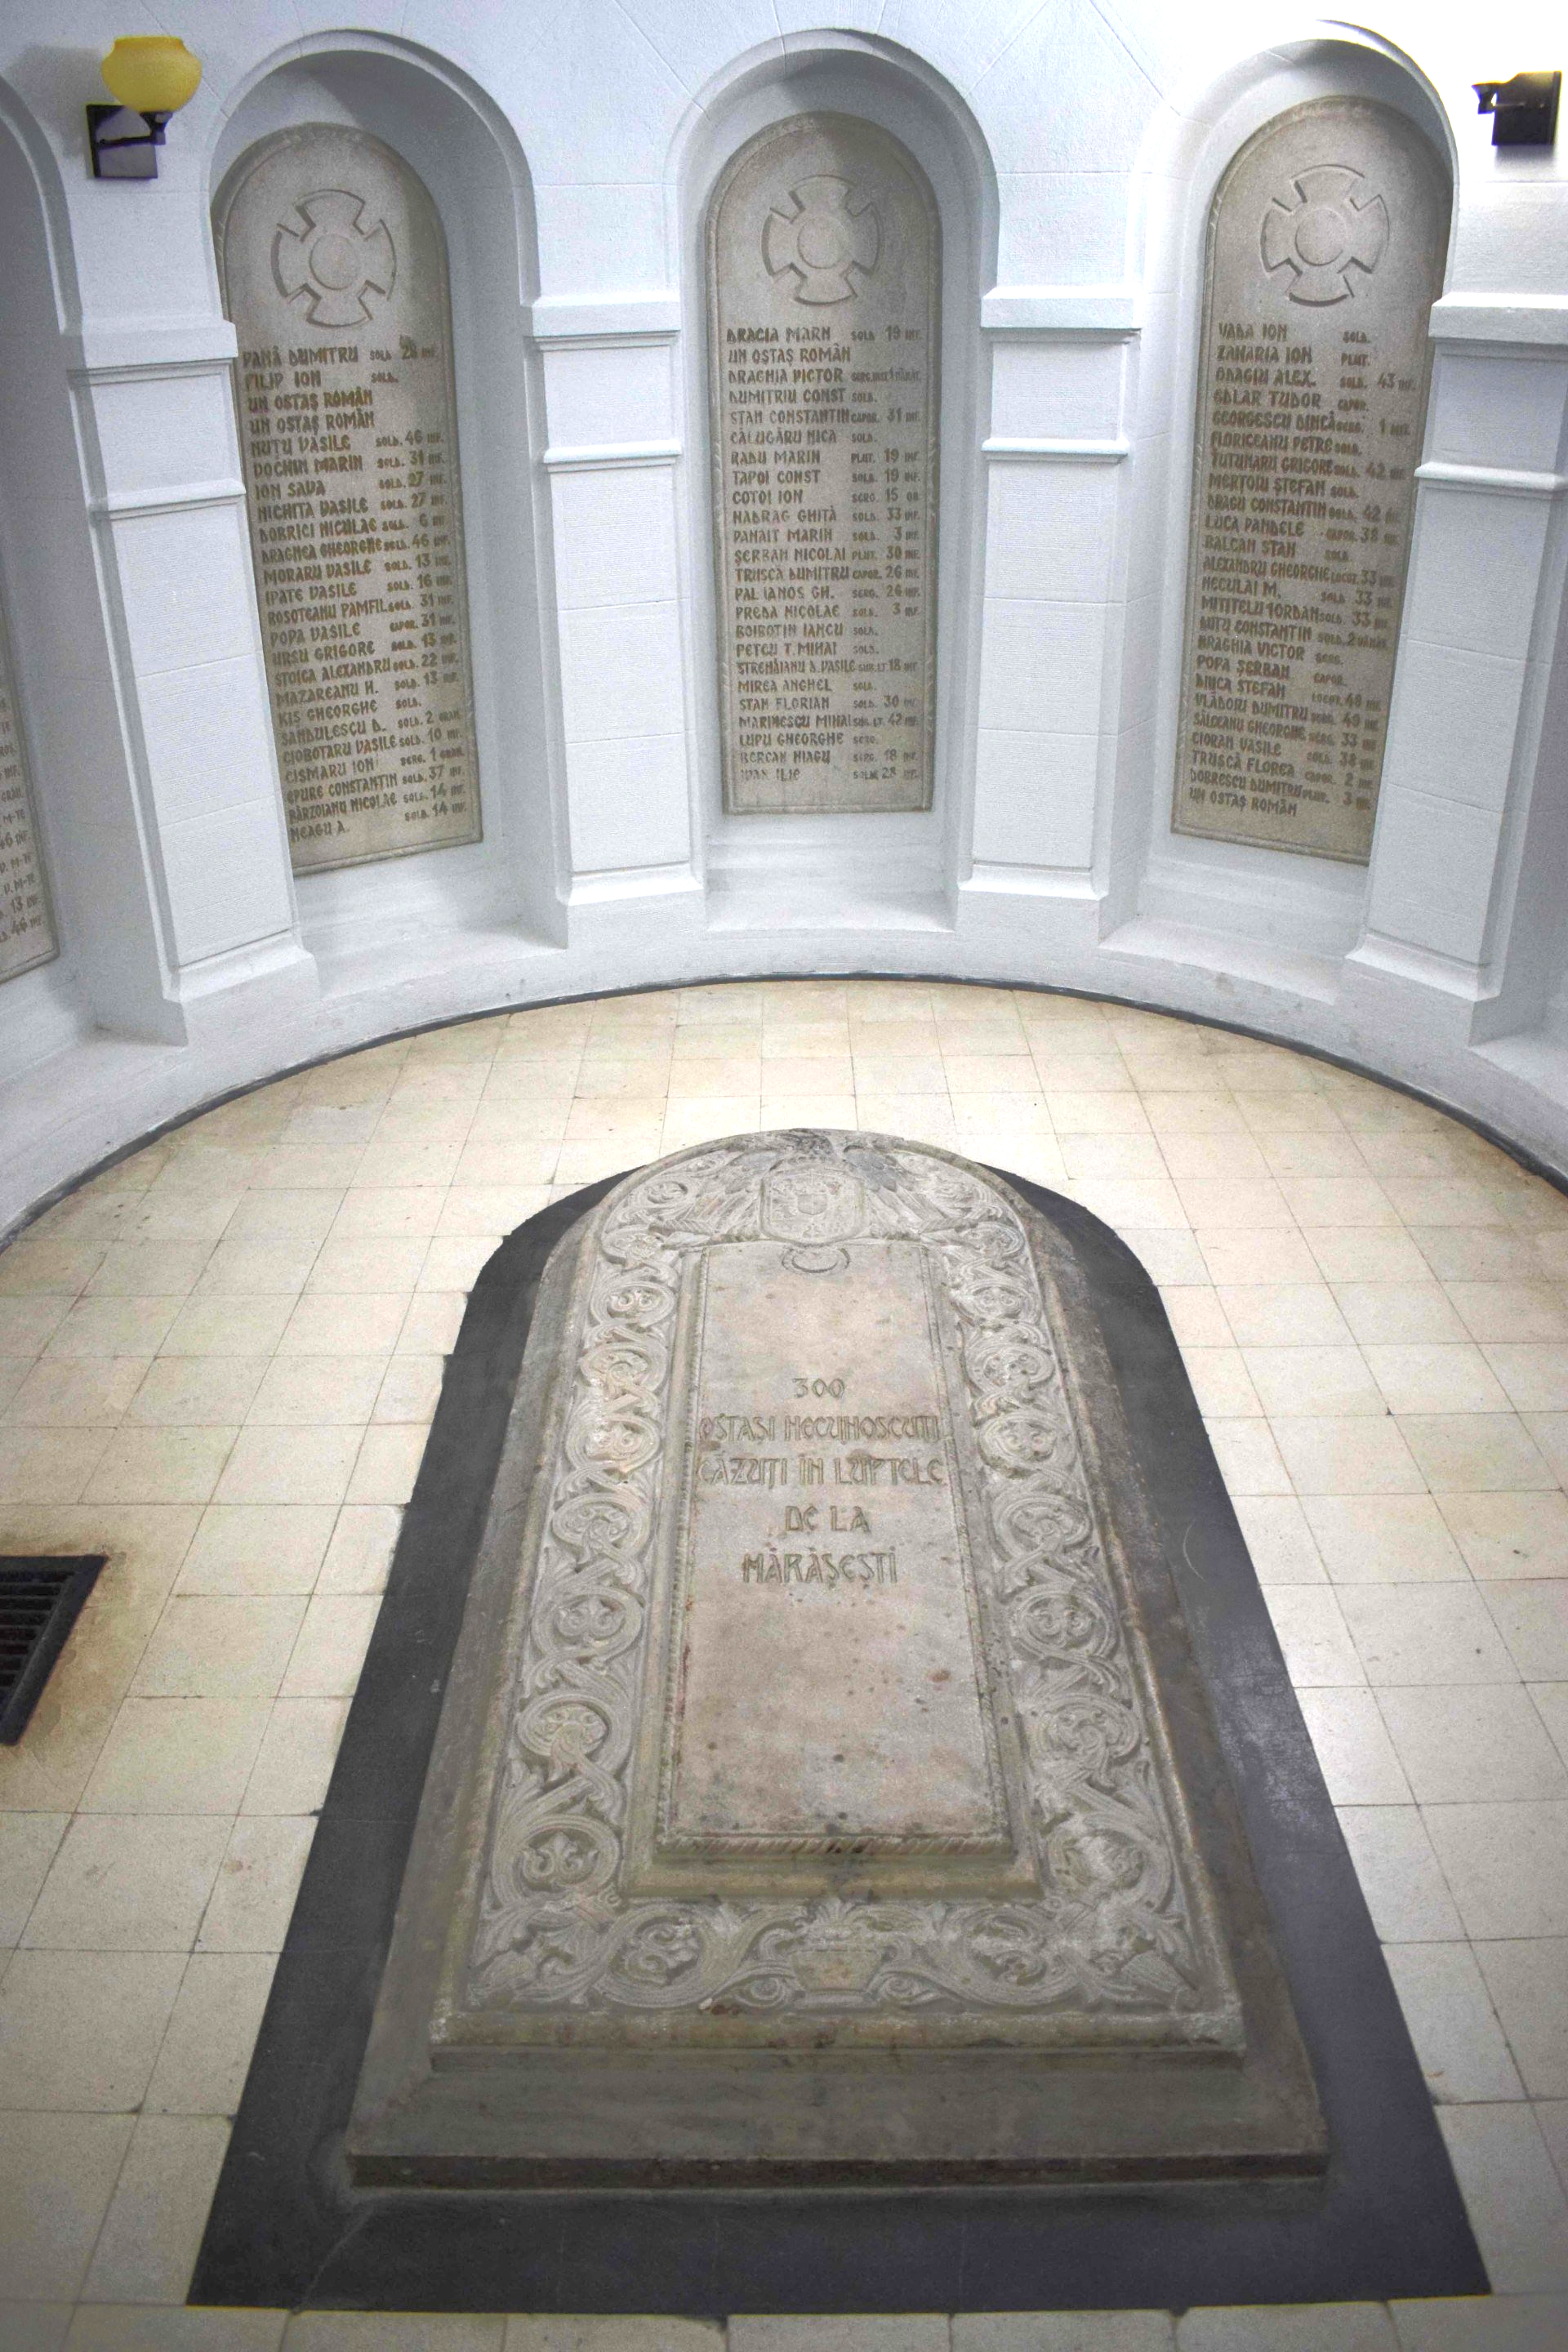 Largest World War One Mausoleum: The Mausoleum of Mărășești set world record